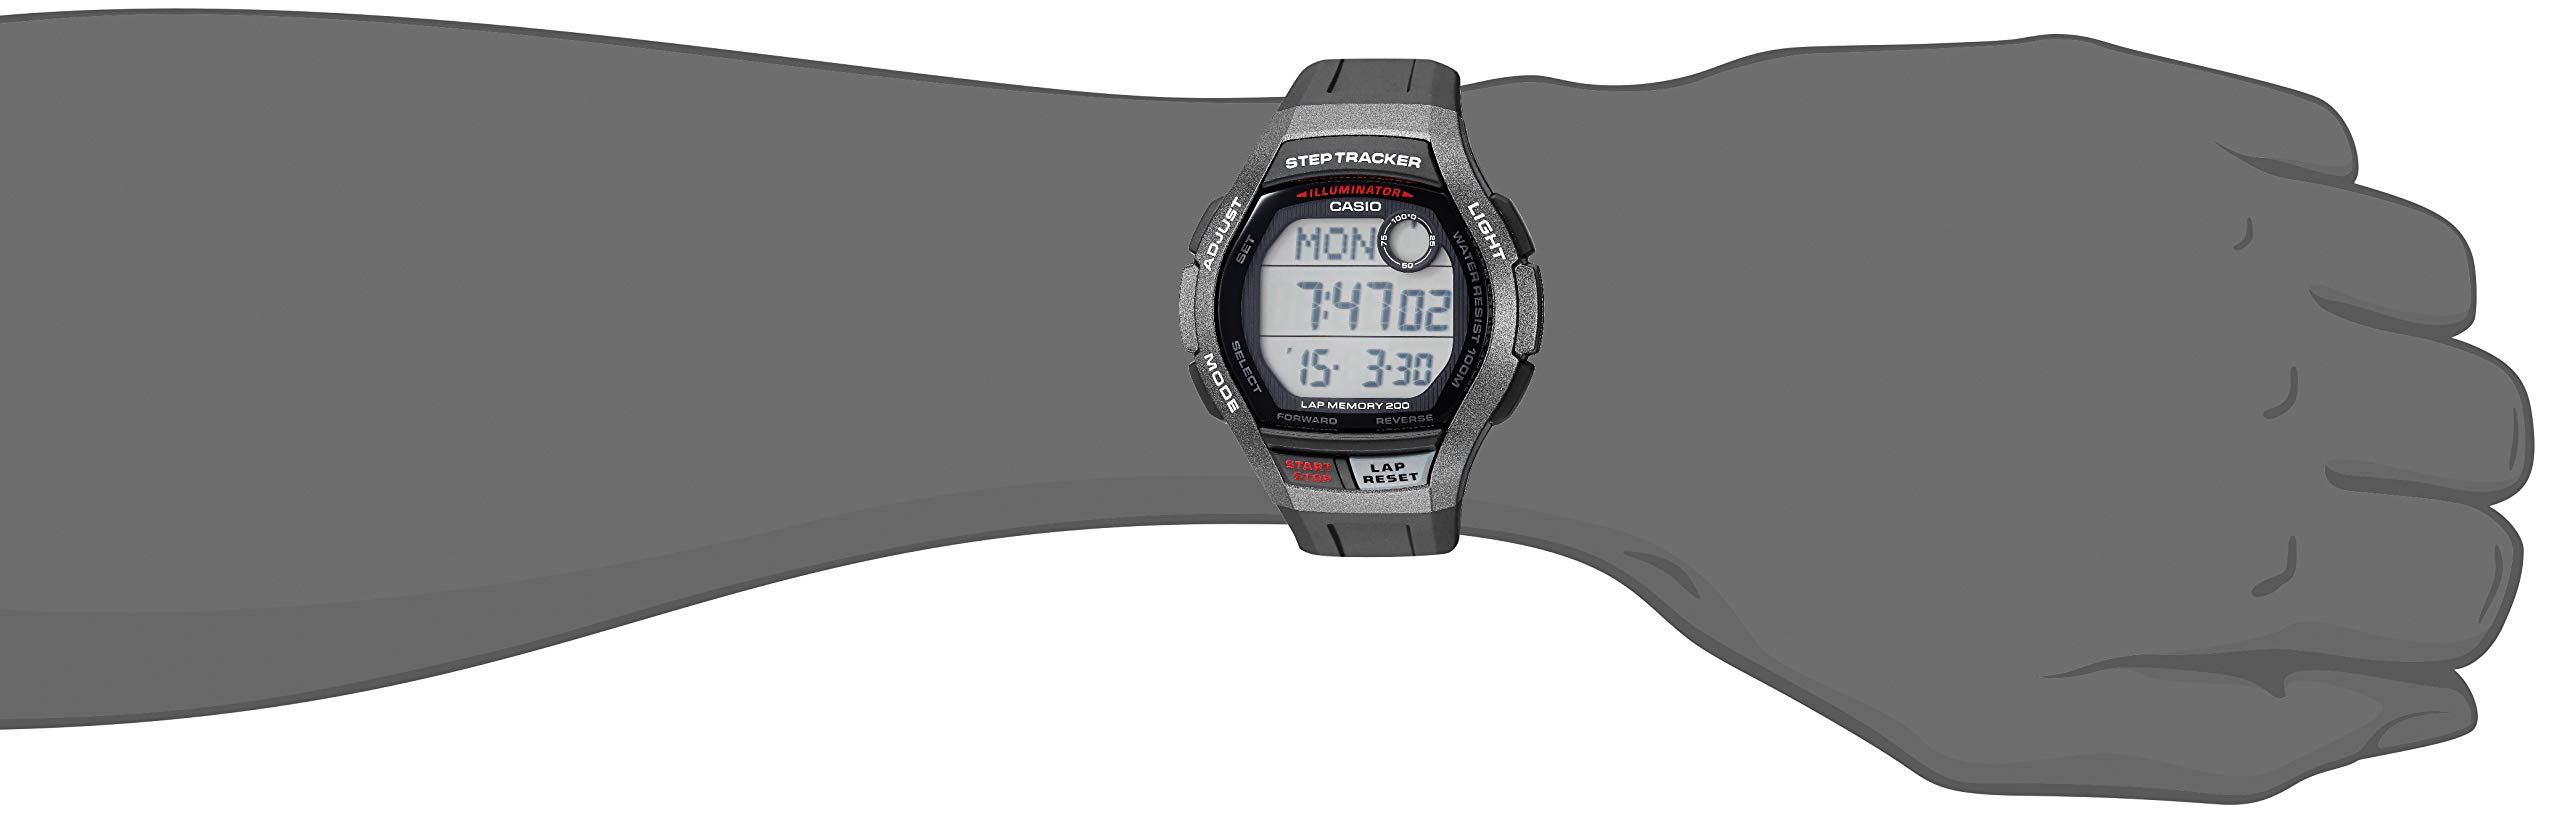 Casio Men's WS- 2000H- 1AVCF Step Tracker Digital Display Quartz Black/Black Watch